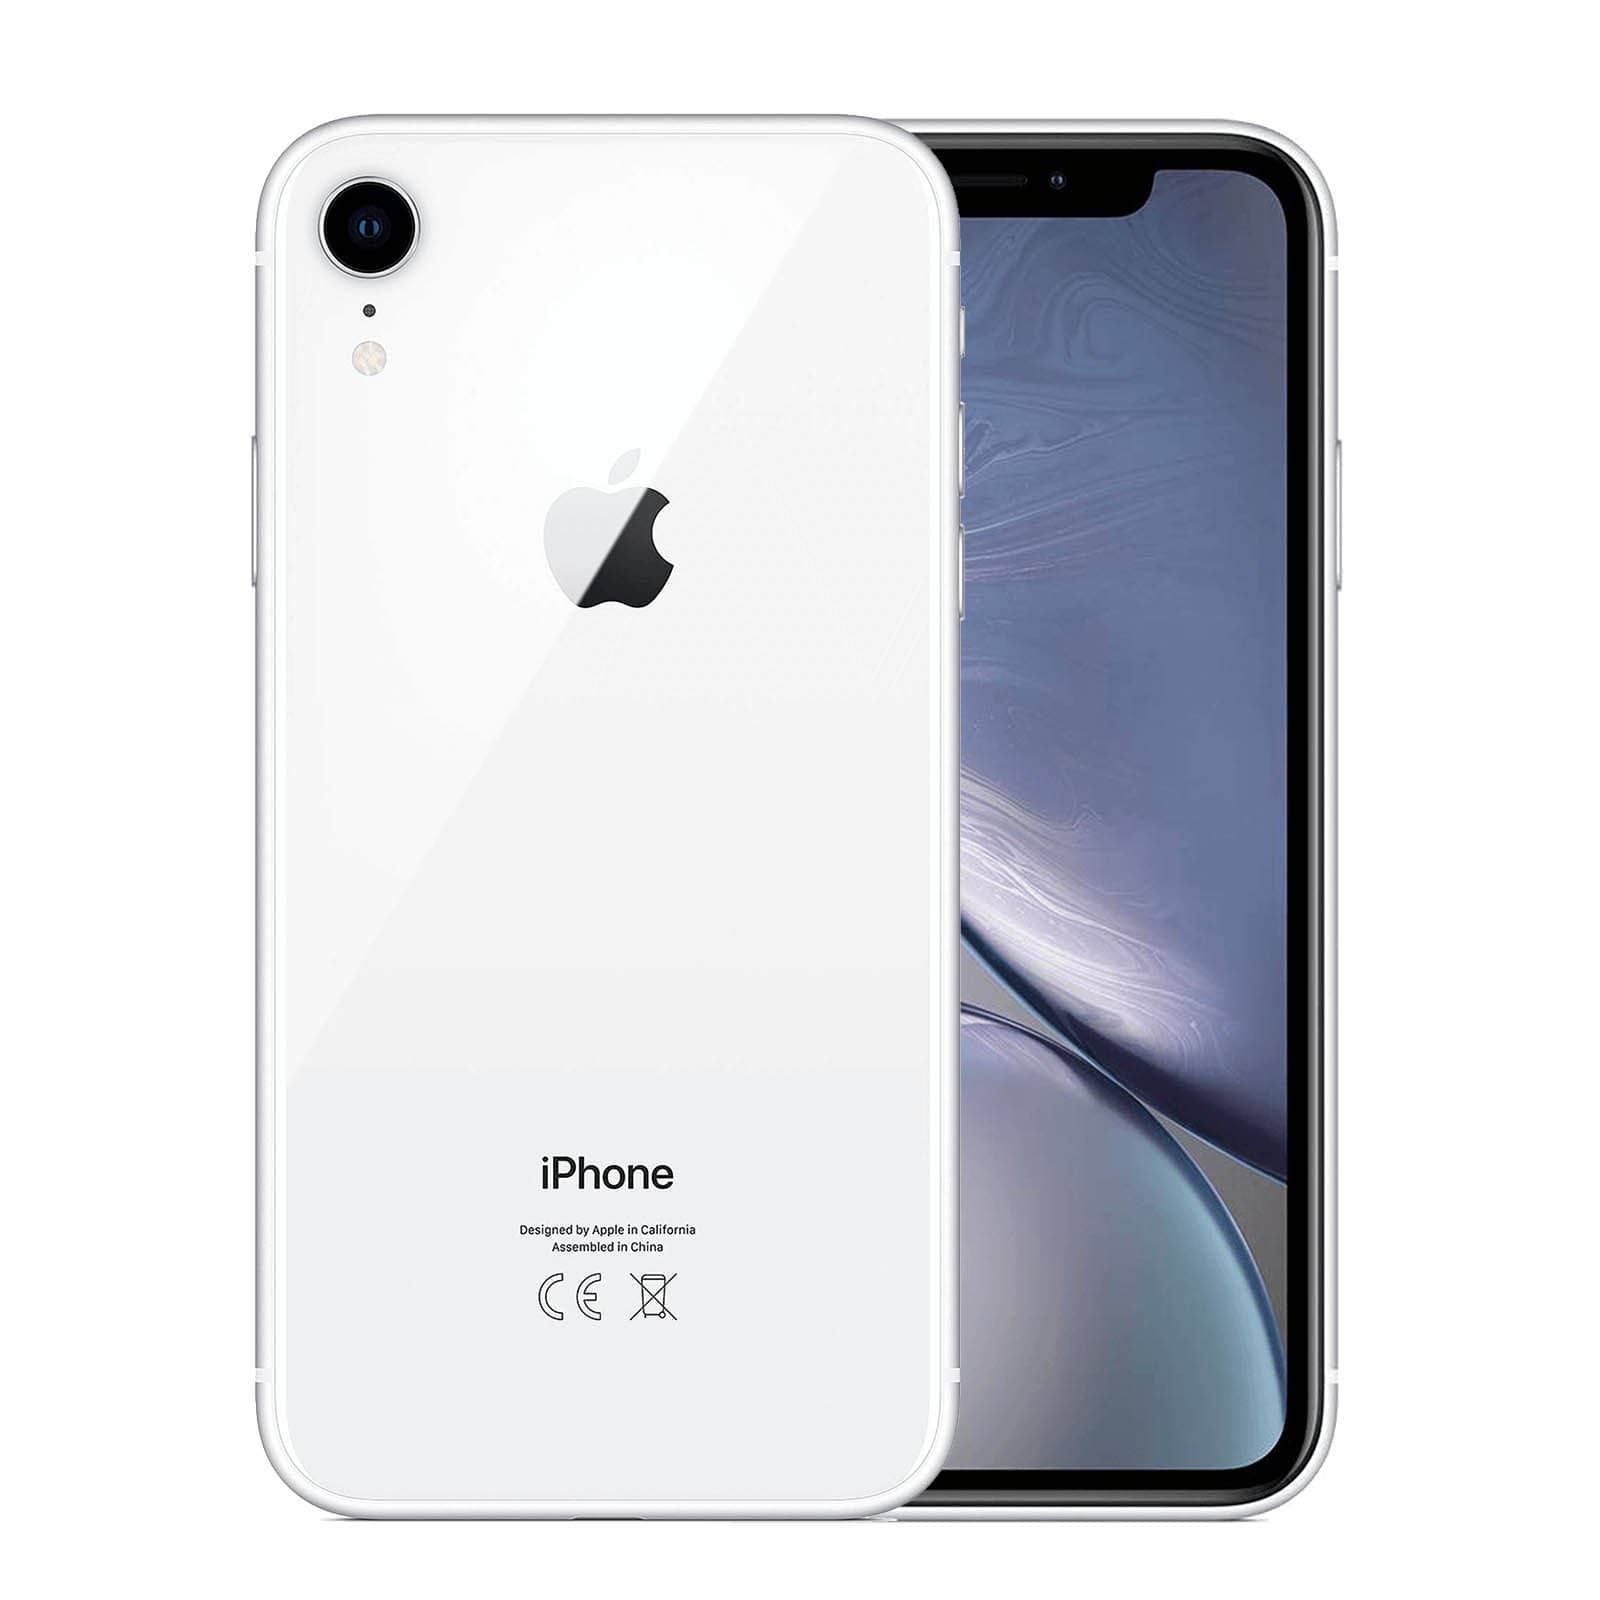 Apple iPhone XR 64GB White Very Good - Unlocked 64GB White Very Good